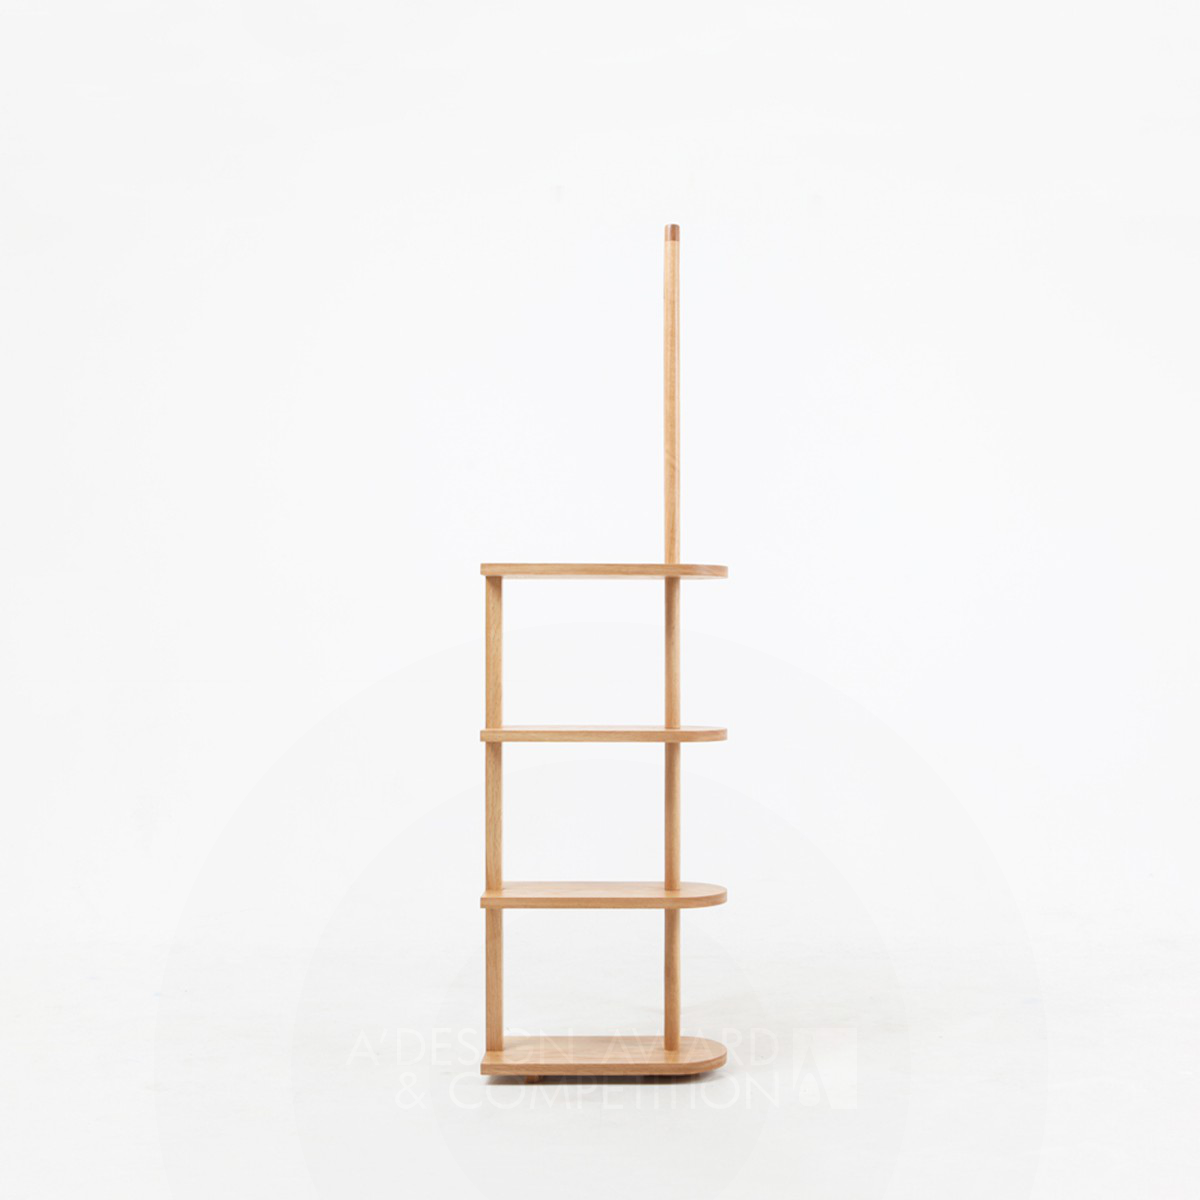 Pivot Multifunctional Shelf by Hiroyuki Sugiyama